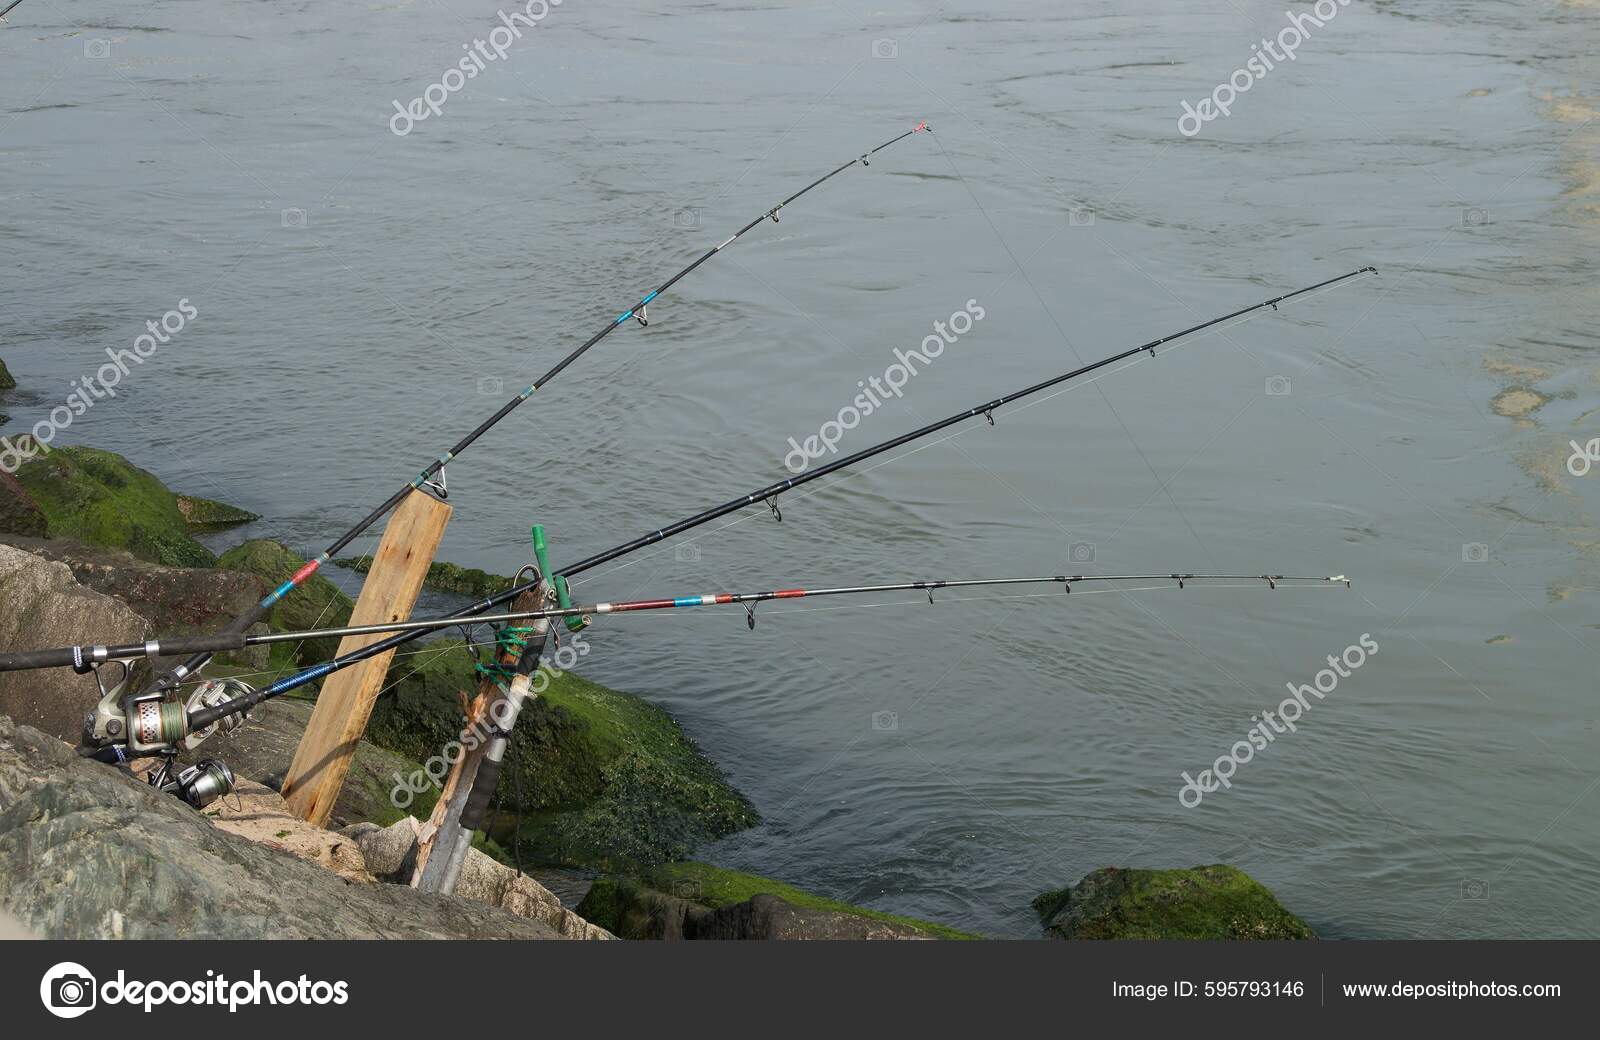 https://st.depositphotos.com/67903508/59579/i/1600/depositphotos_595793146-stock-photo-closeup-shot-three-fishing-rods.jpg